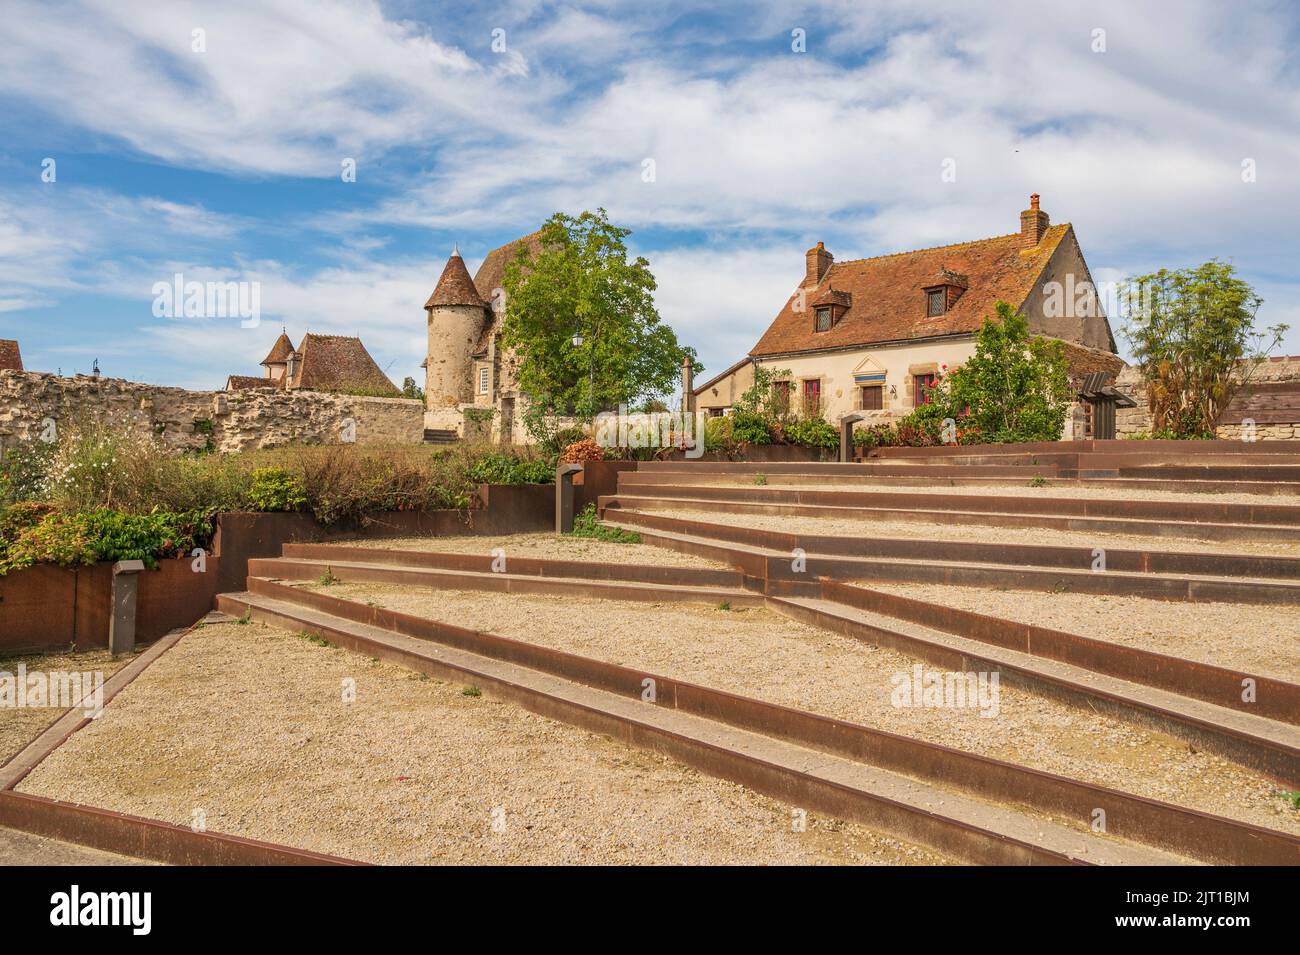 The maison du chanoine and its small square cum park at Bourbon-l'Archambault, France Stock Photo